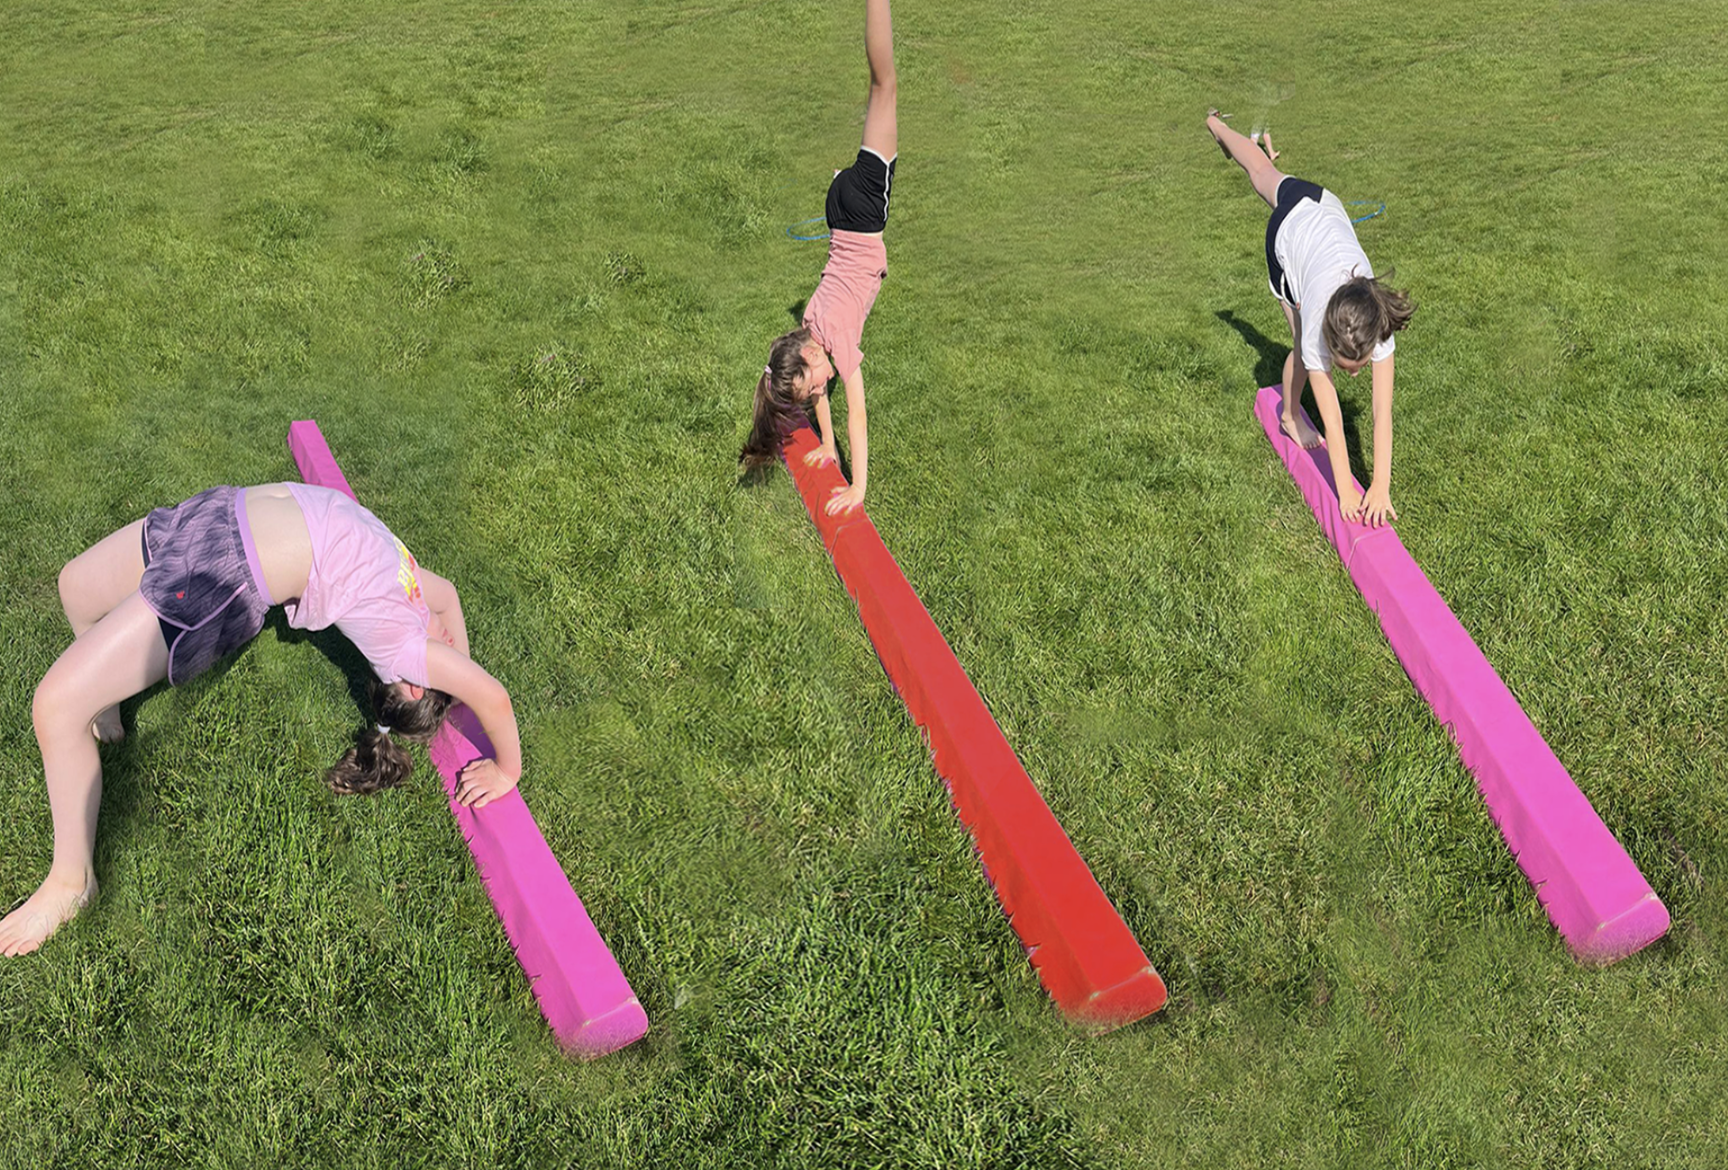 Gymnastics with three young girls on balance beams 